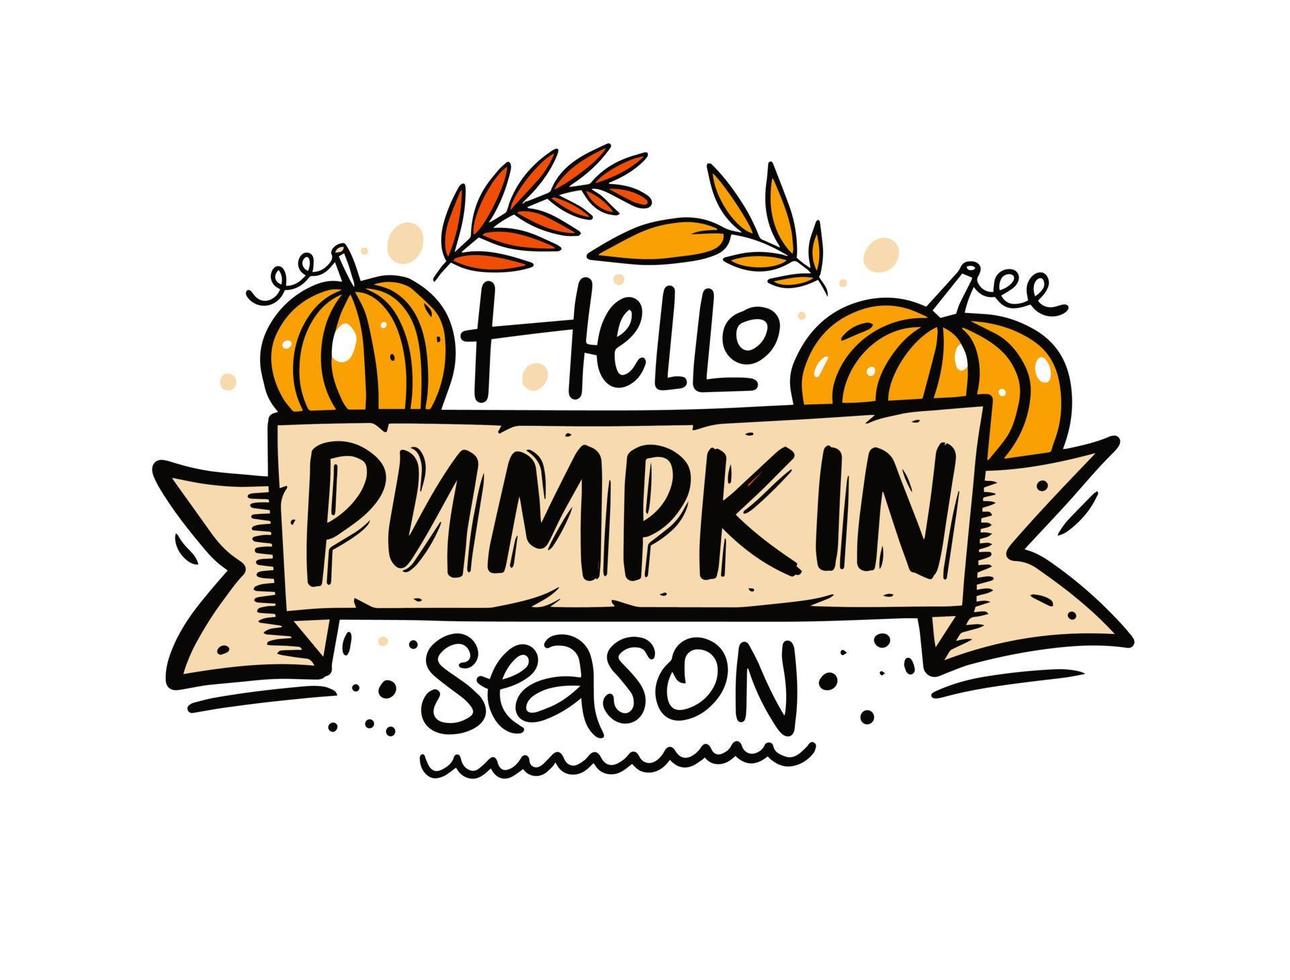 Hello Pumpkin season hand drawn colorful lettering phrase. vector